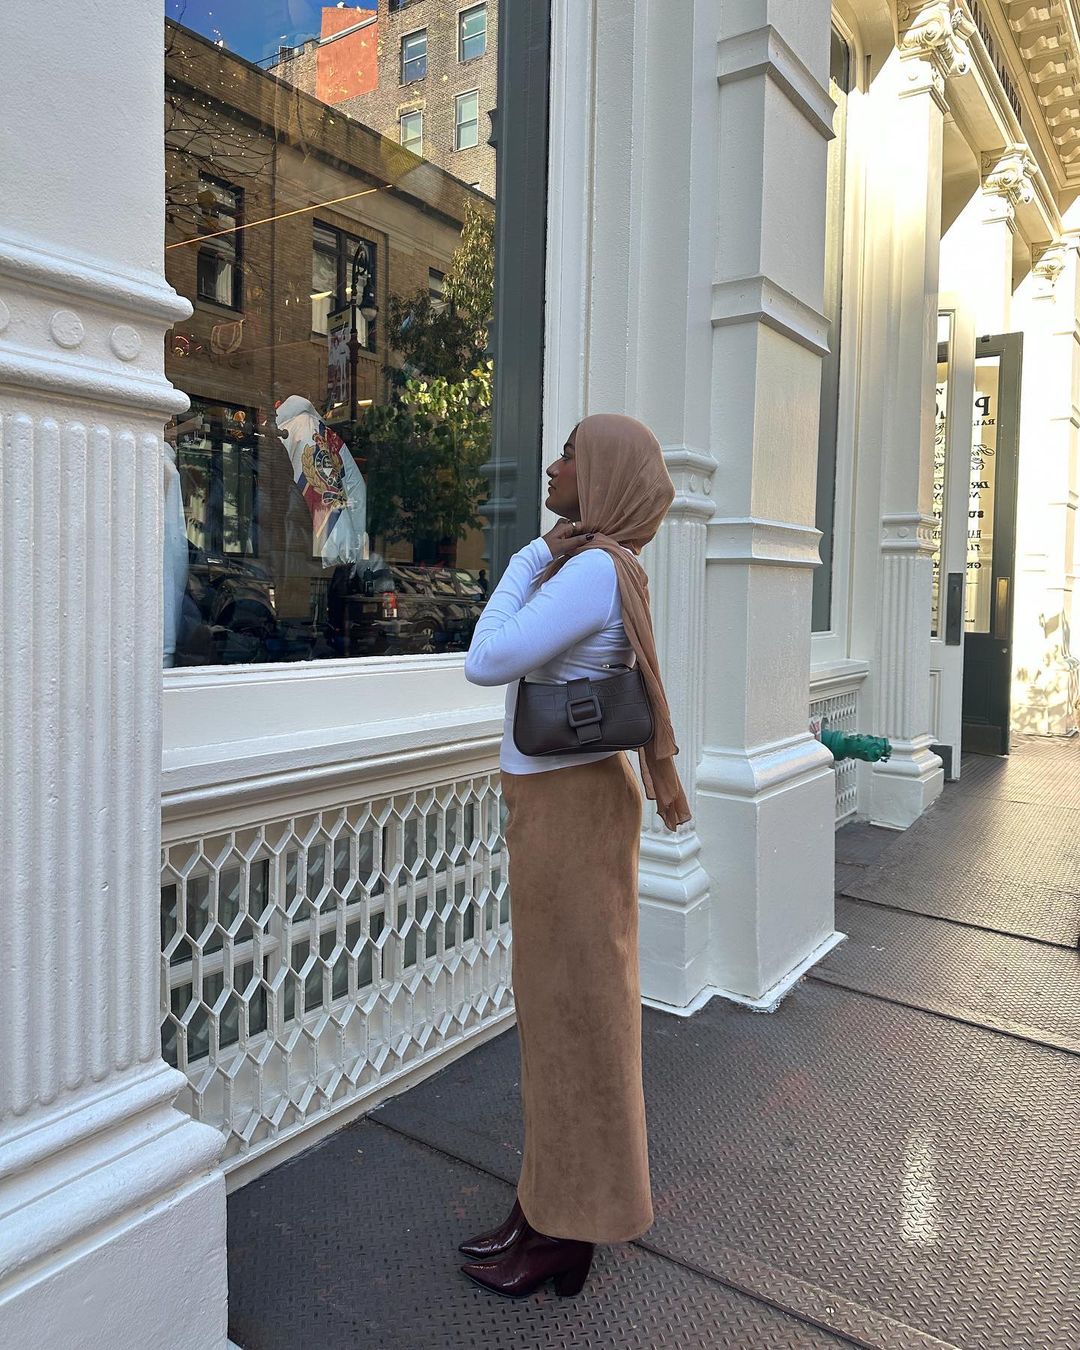 Urban Modesty - Camel Suede Pencil Maxi Skirt